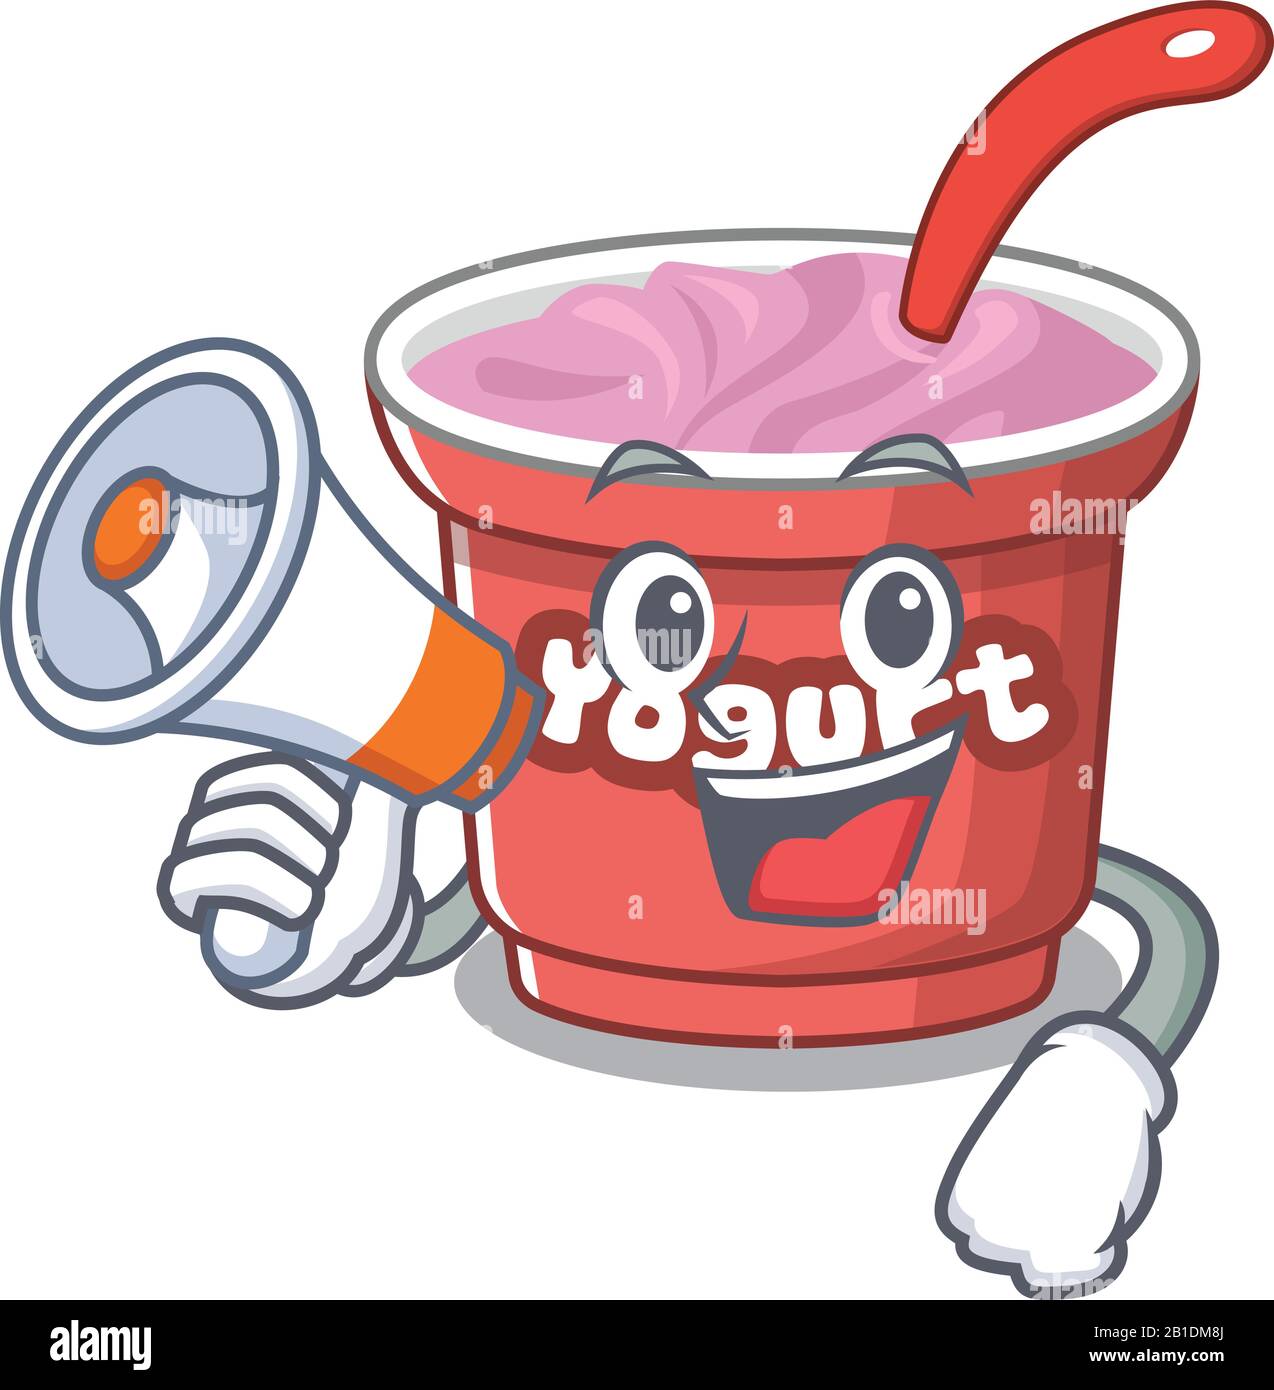 A mascot of yogurt speaking on a megaphone Stock Vector